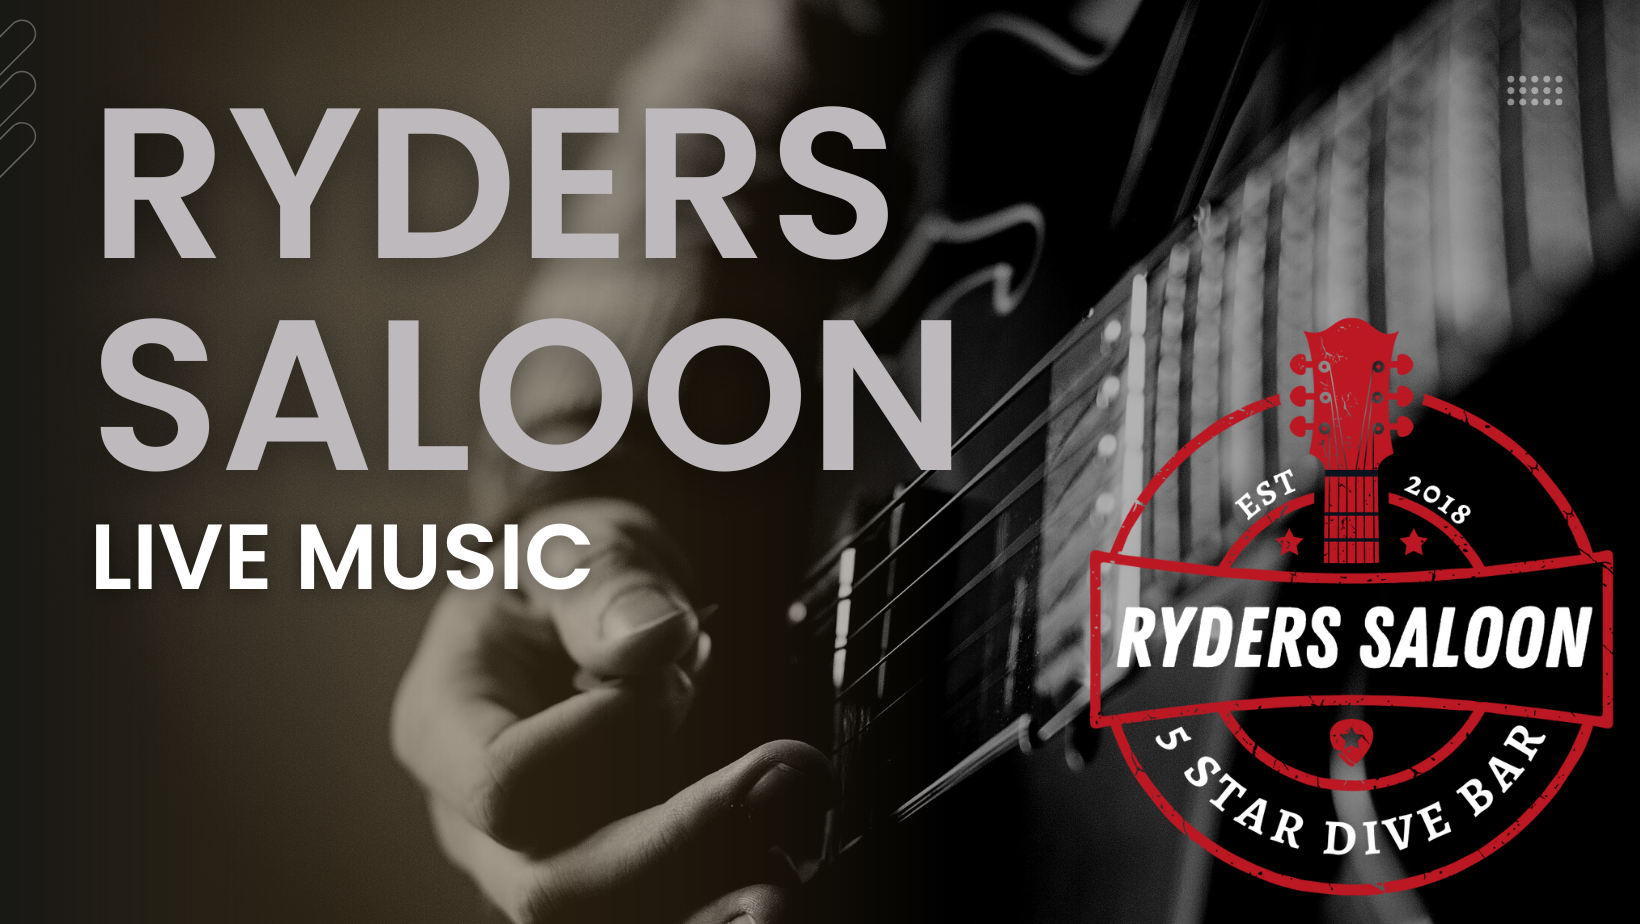 Ryders Saloon